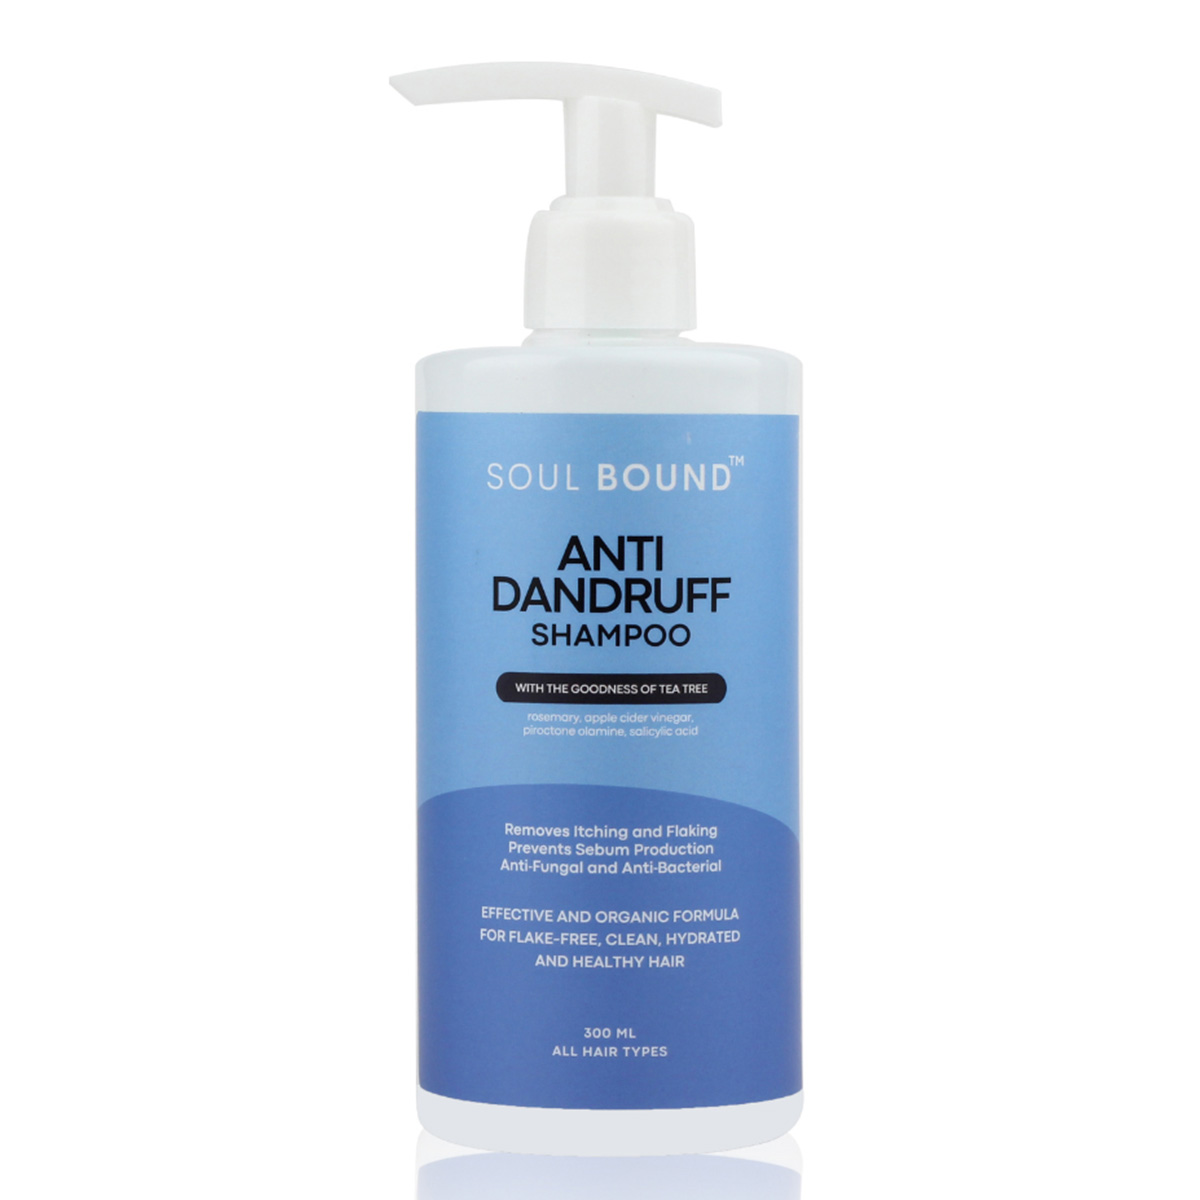 Soul Bound Anti Dandruff Shampoo, 300ml